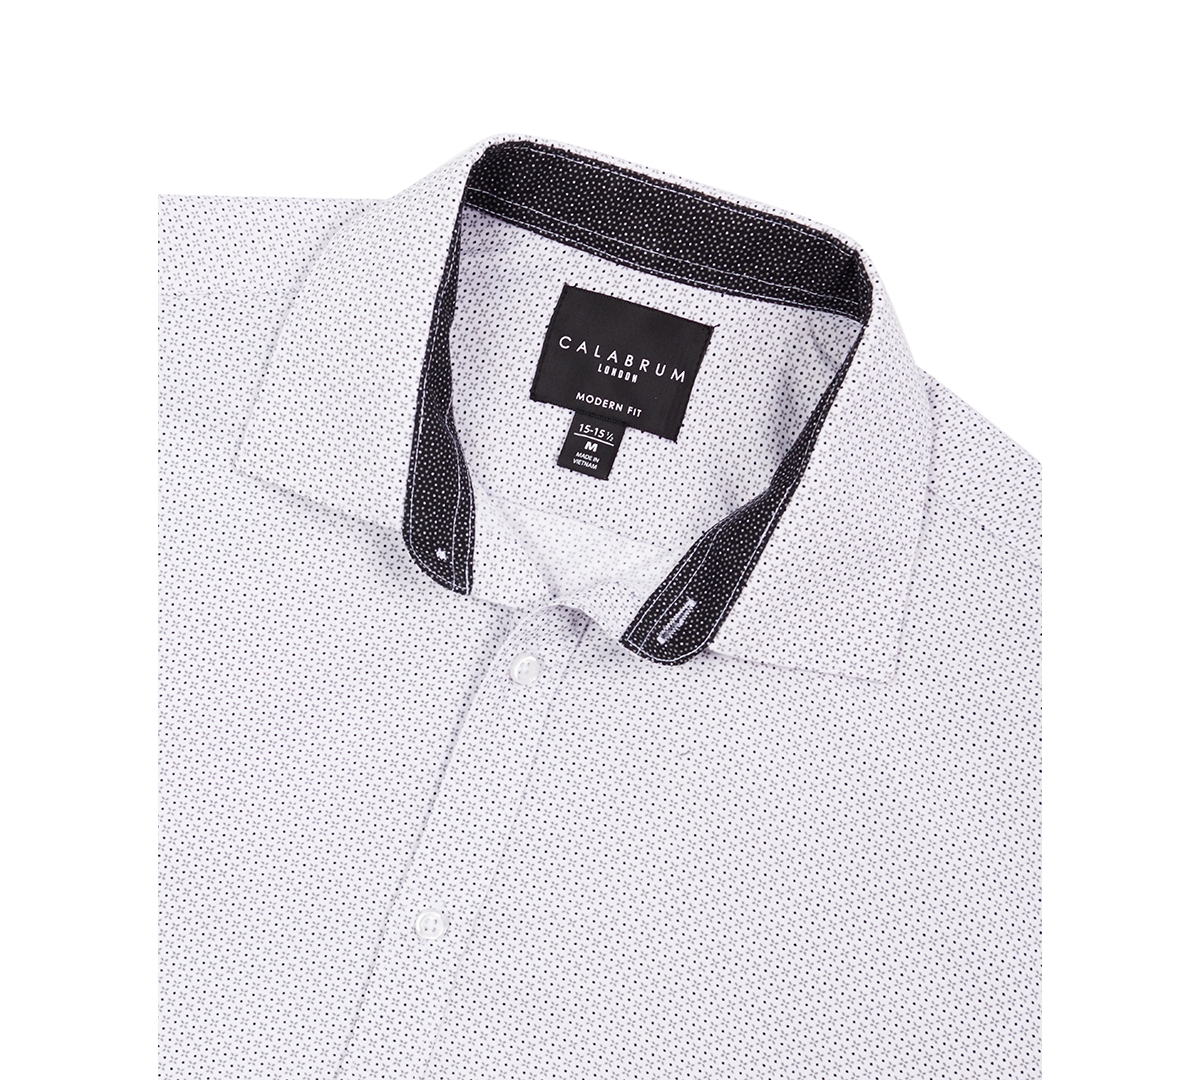 Calabrum Men's Regular Fit Mini Neat Print Wrinkle Free Performance Dress Shirt In Grey